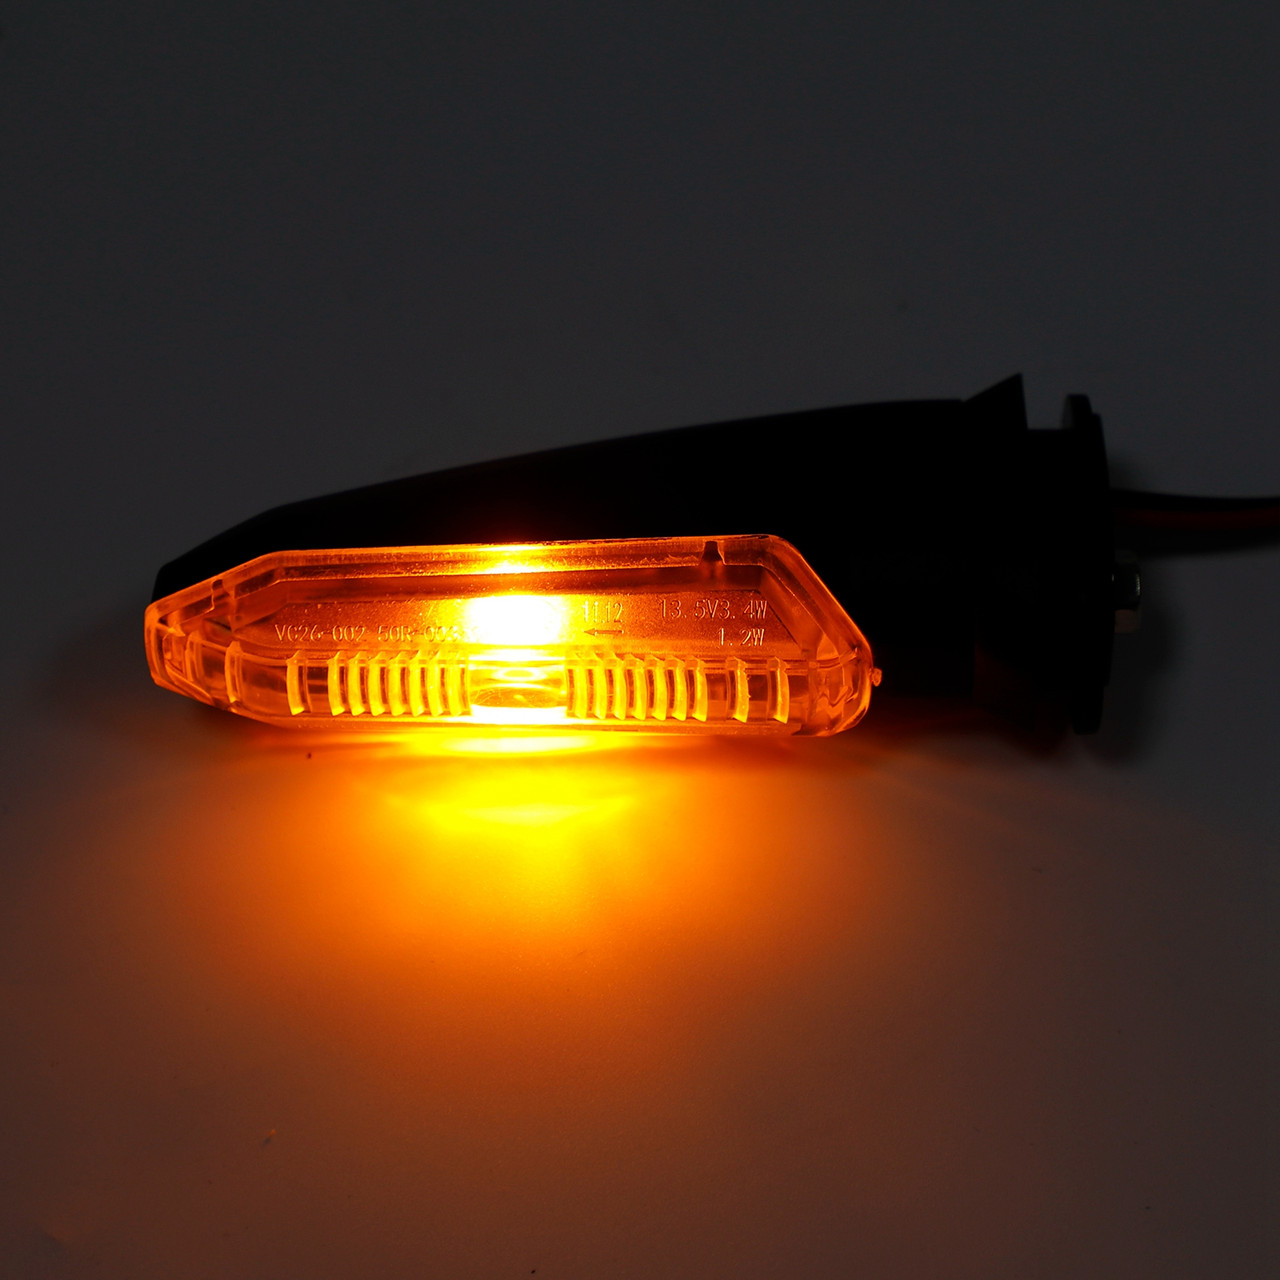 LED Turn Signal Lights Indicator Lamps For HONDA CRF250 CB500 CB650F CTX700 Clear